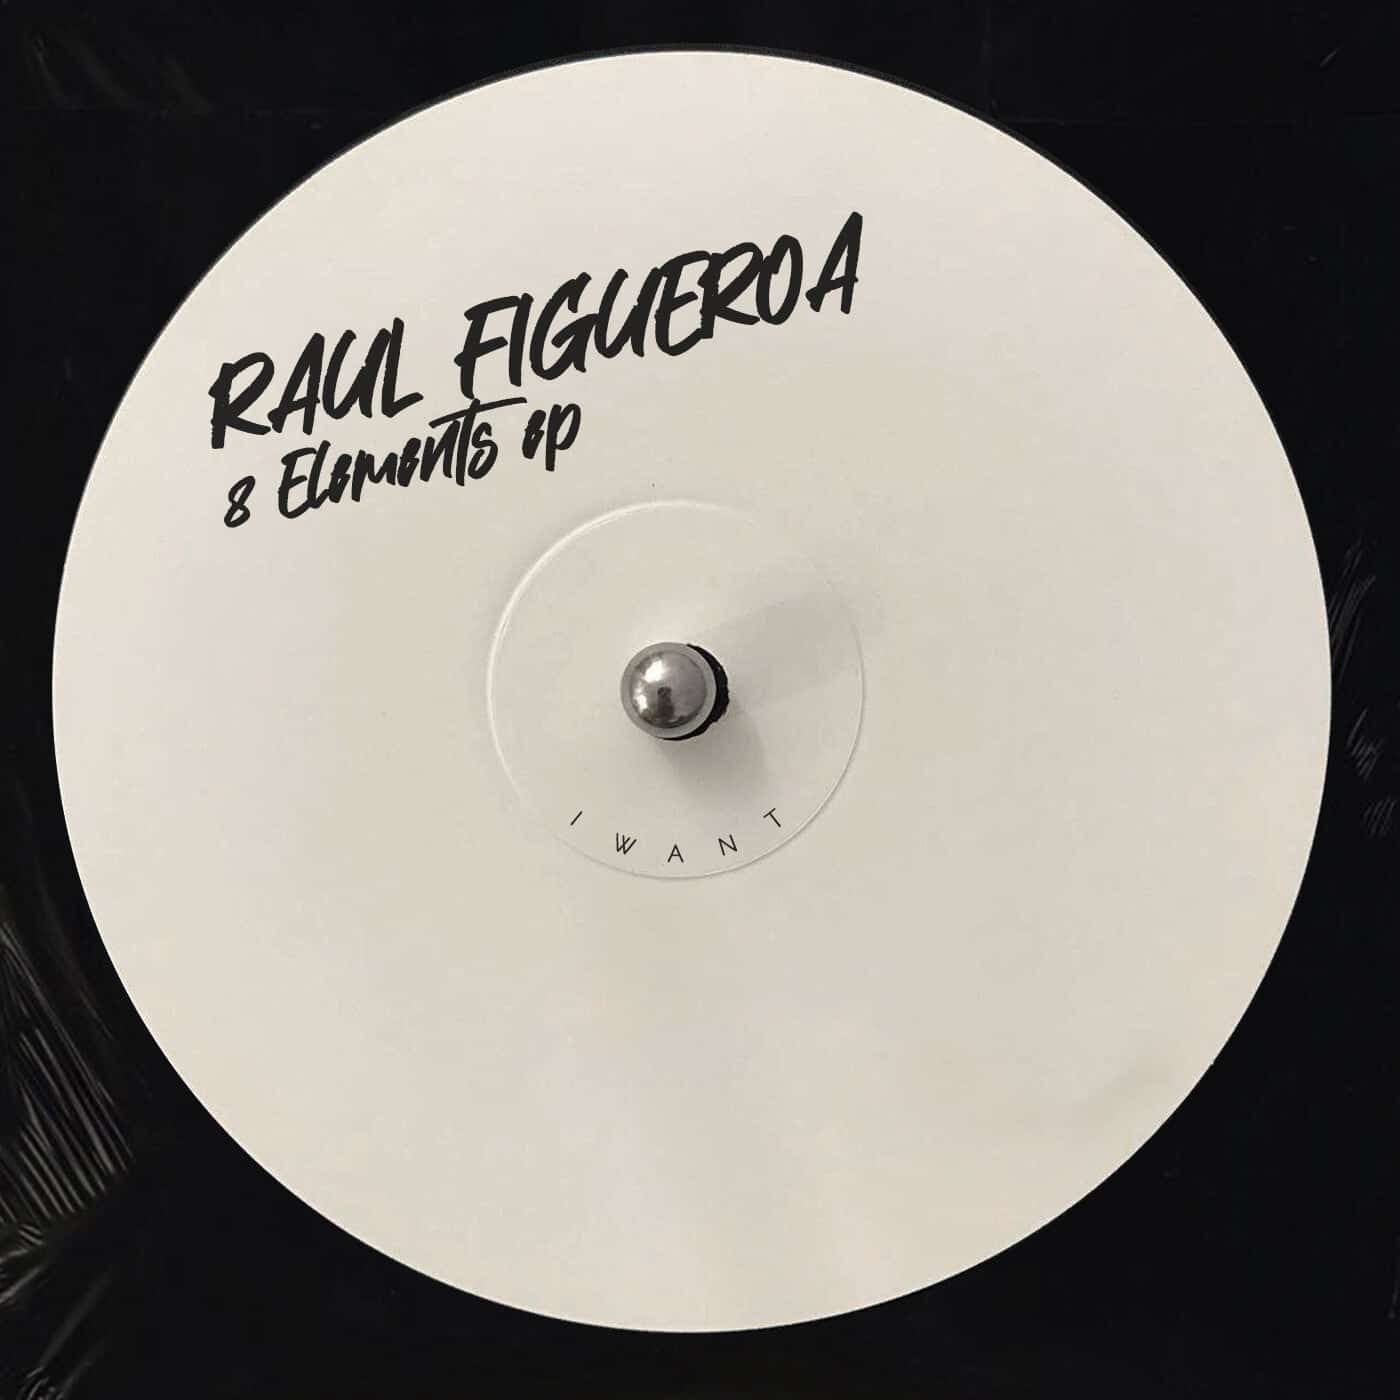 Download Raul Figueroa - 8 Elements EP on Electrobuzz